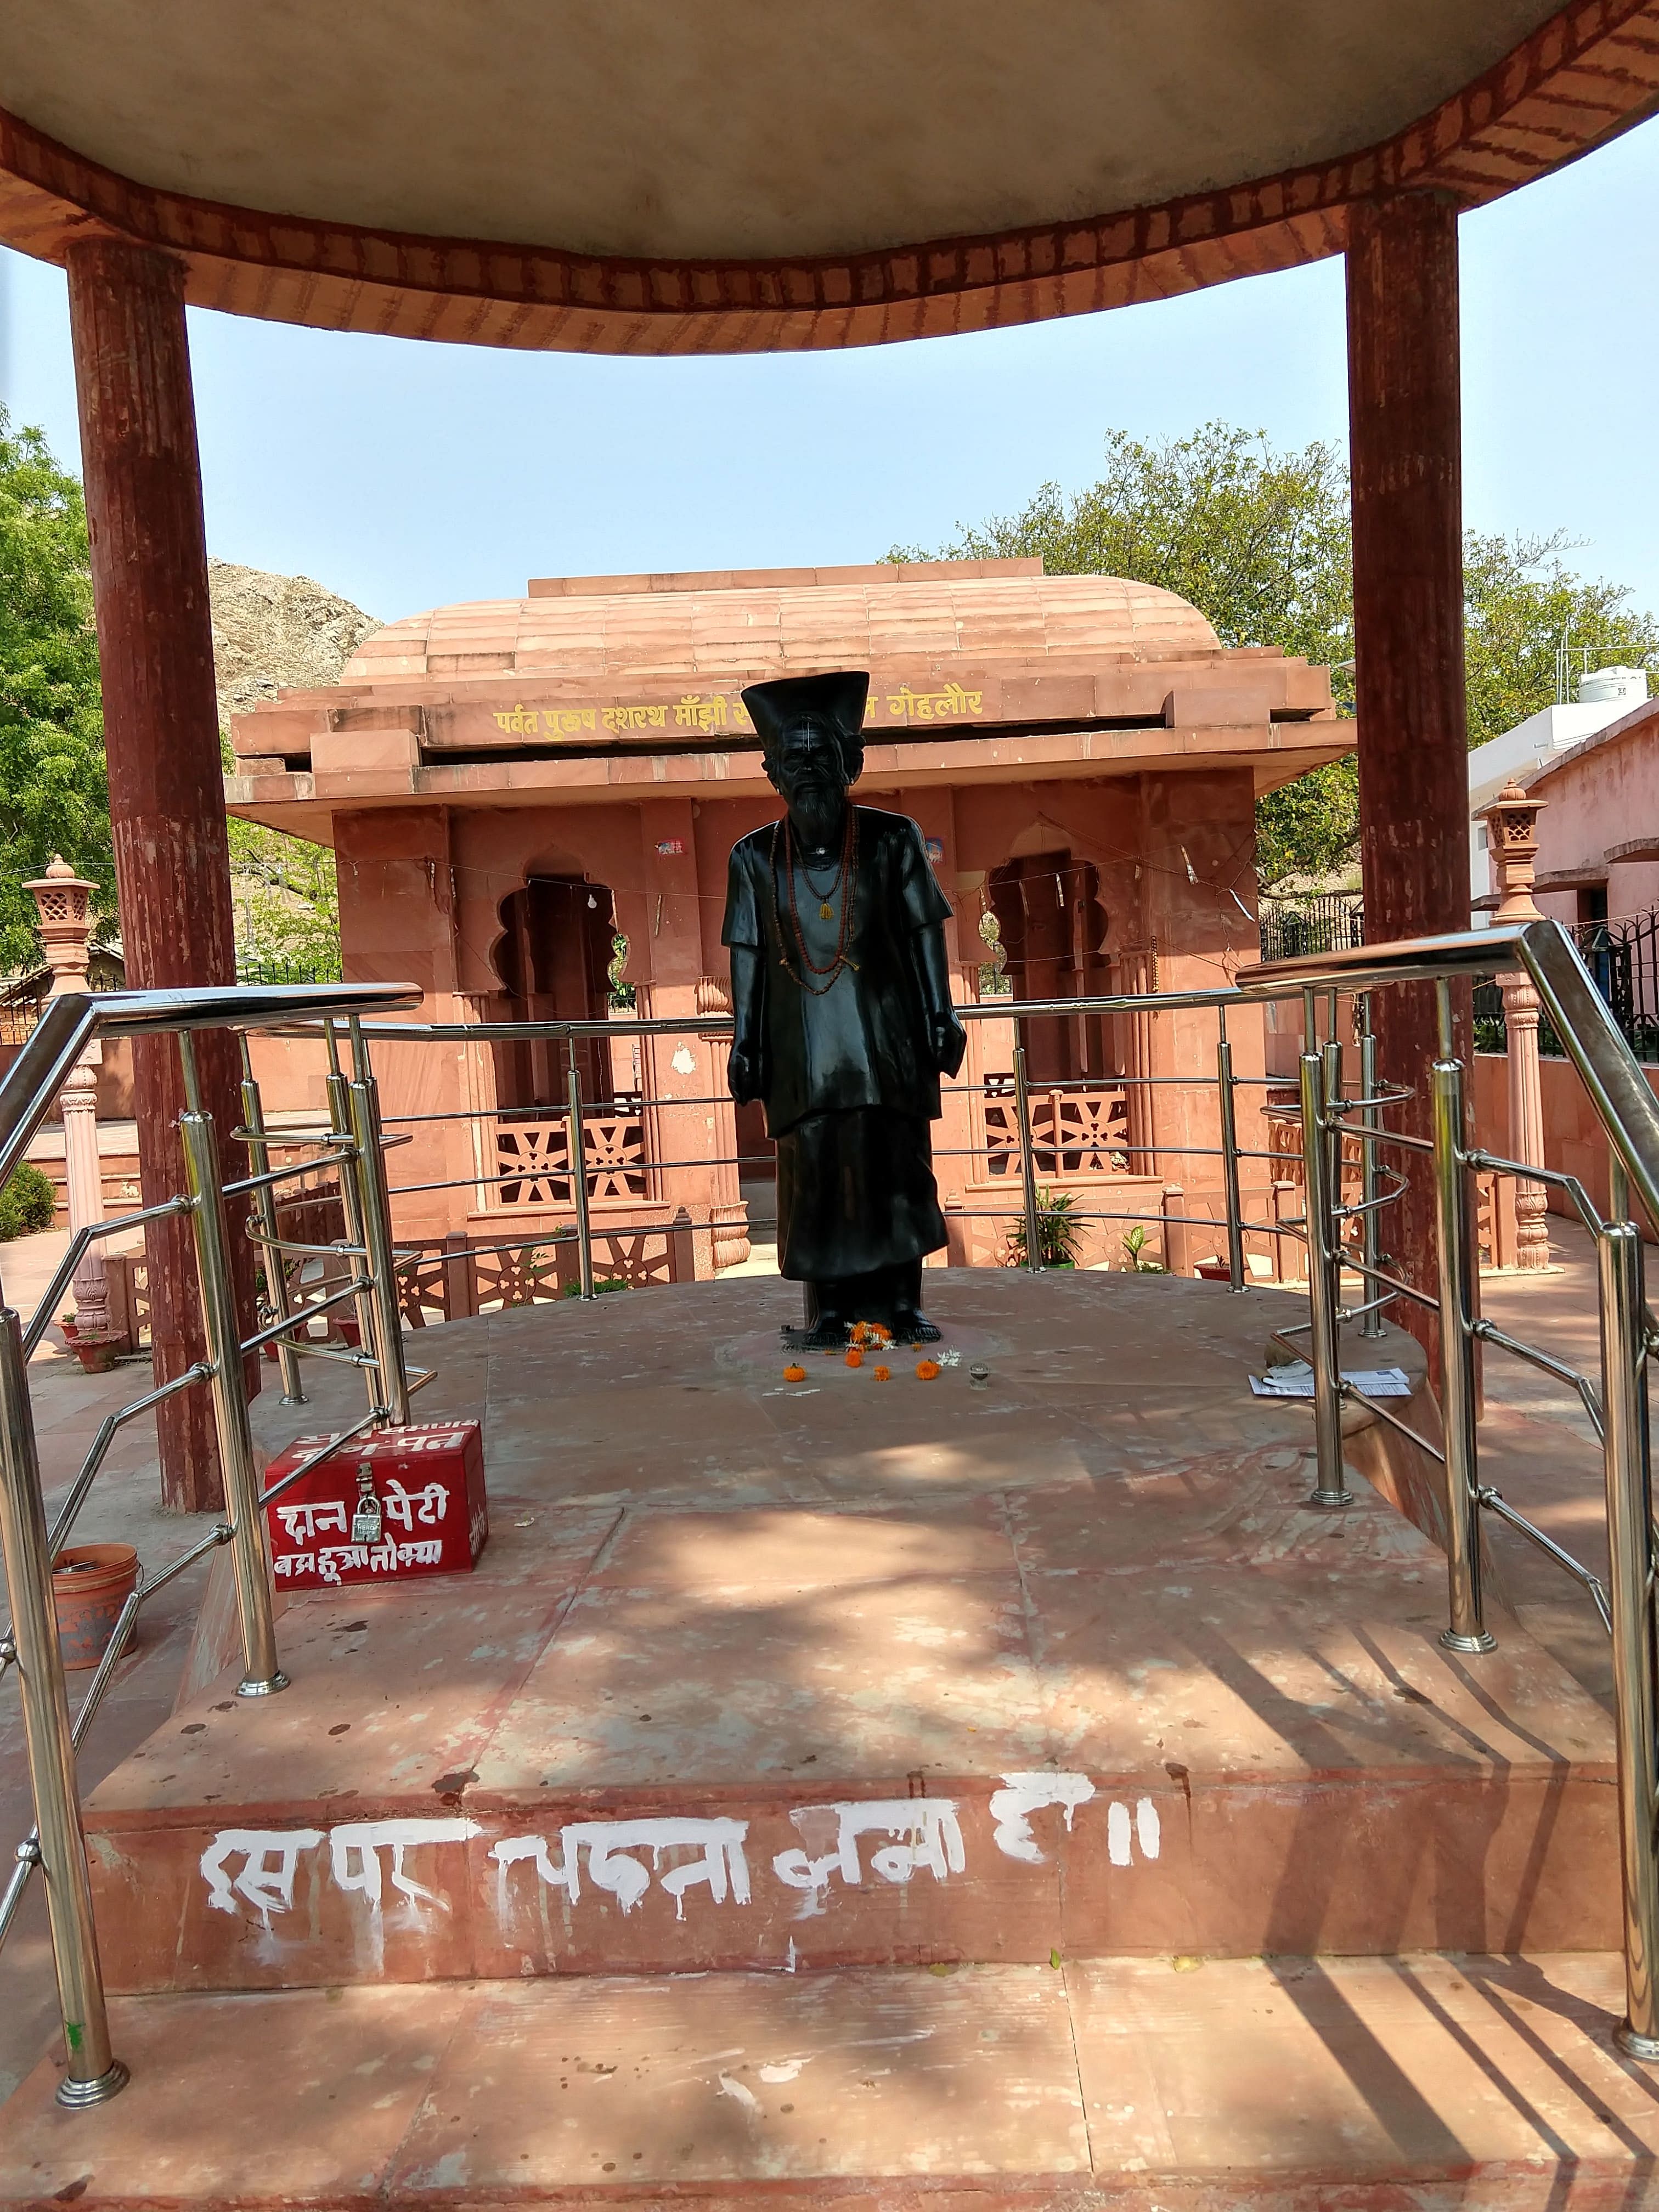 Memorial of Dashrath Manjhi where he is worshipped like a god.